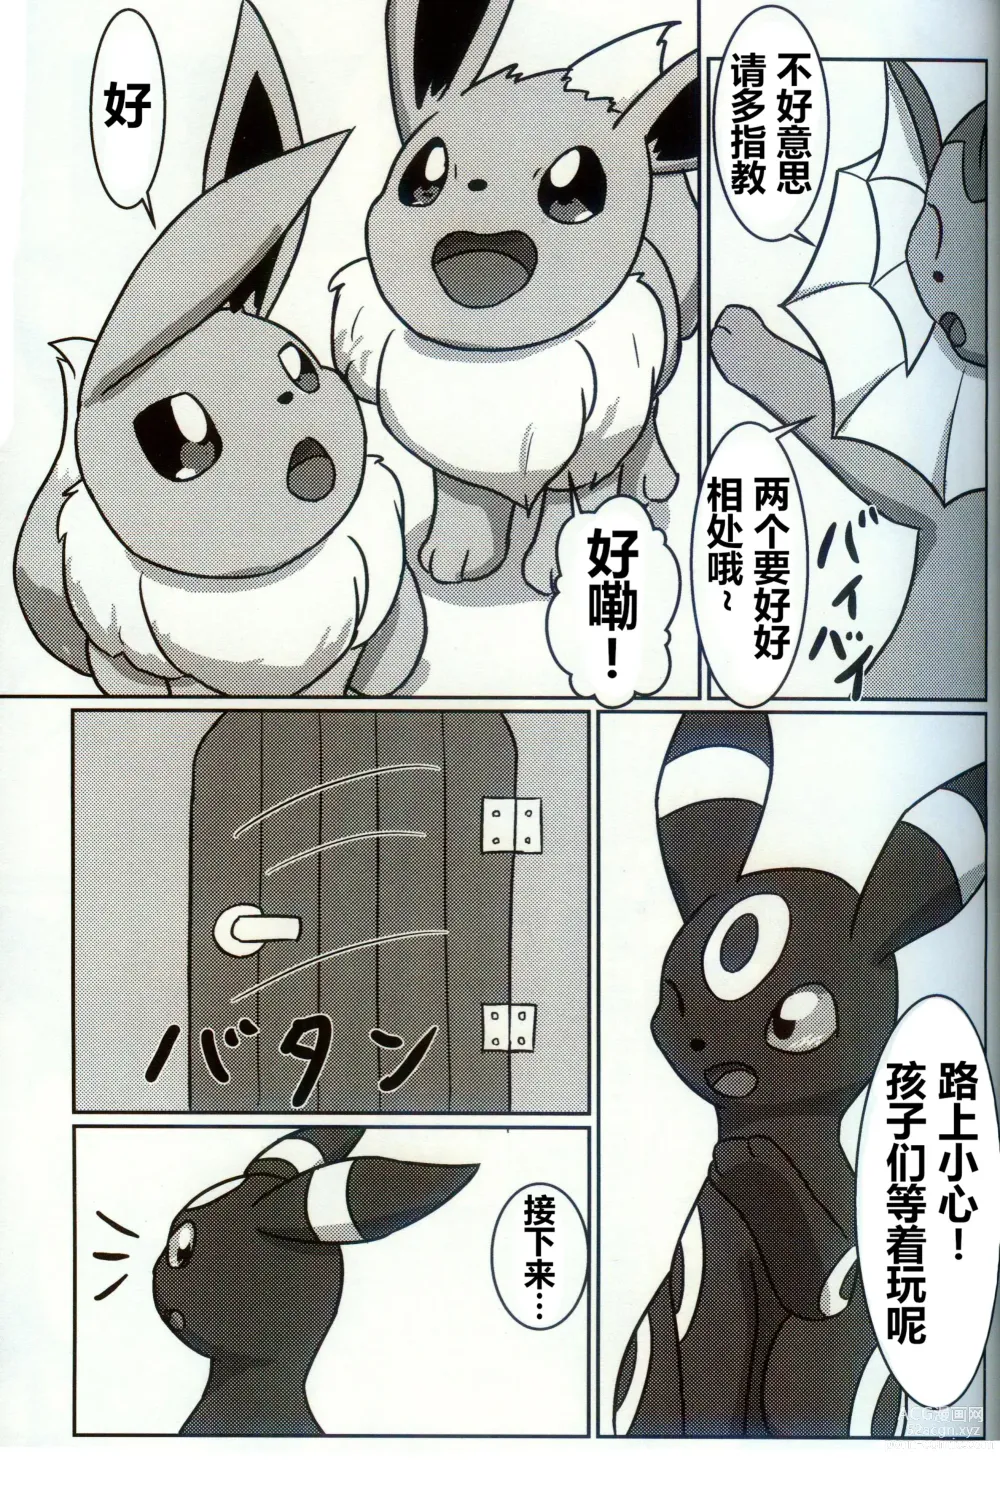 Page 5 of doujinshi 被拜托照顾附近的双胞胎发生了不得了的事...